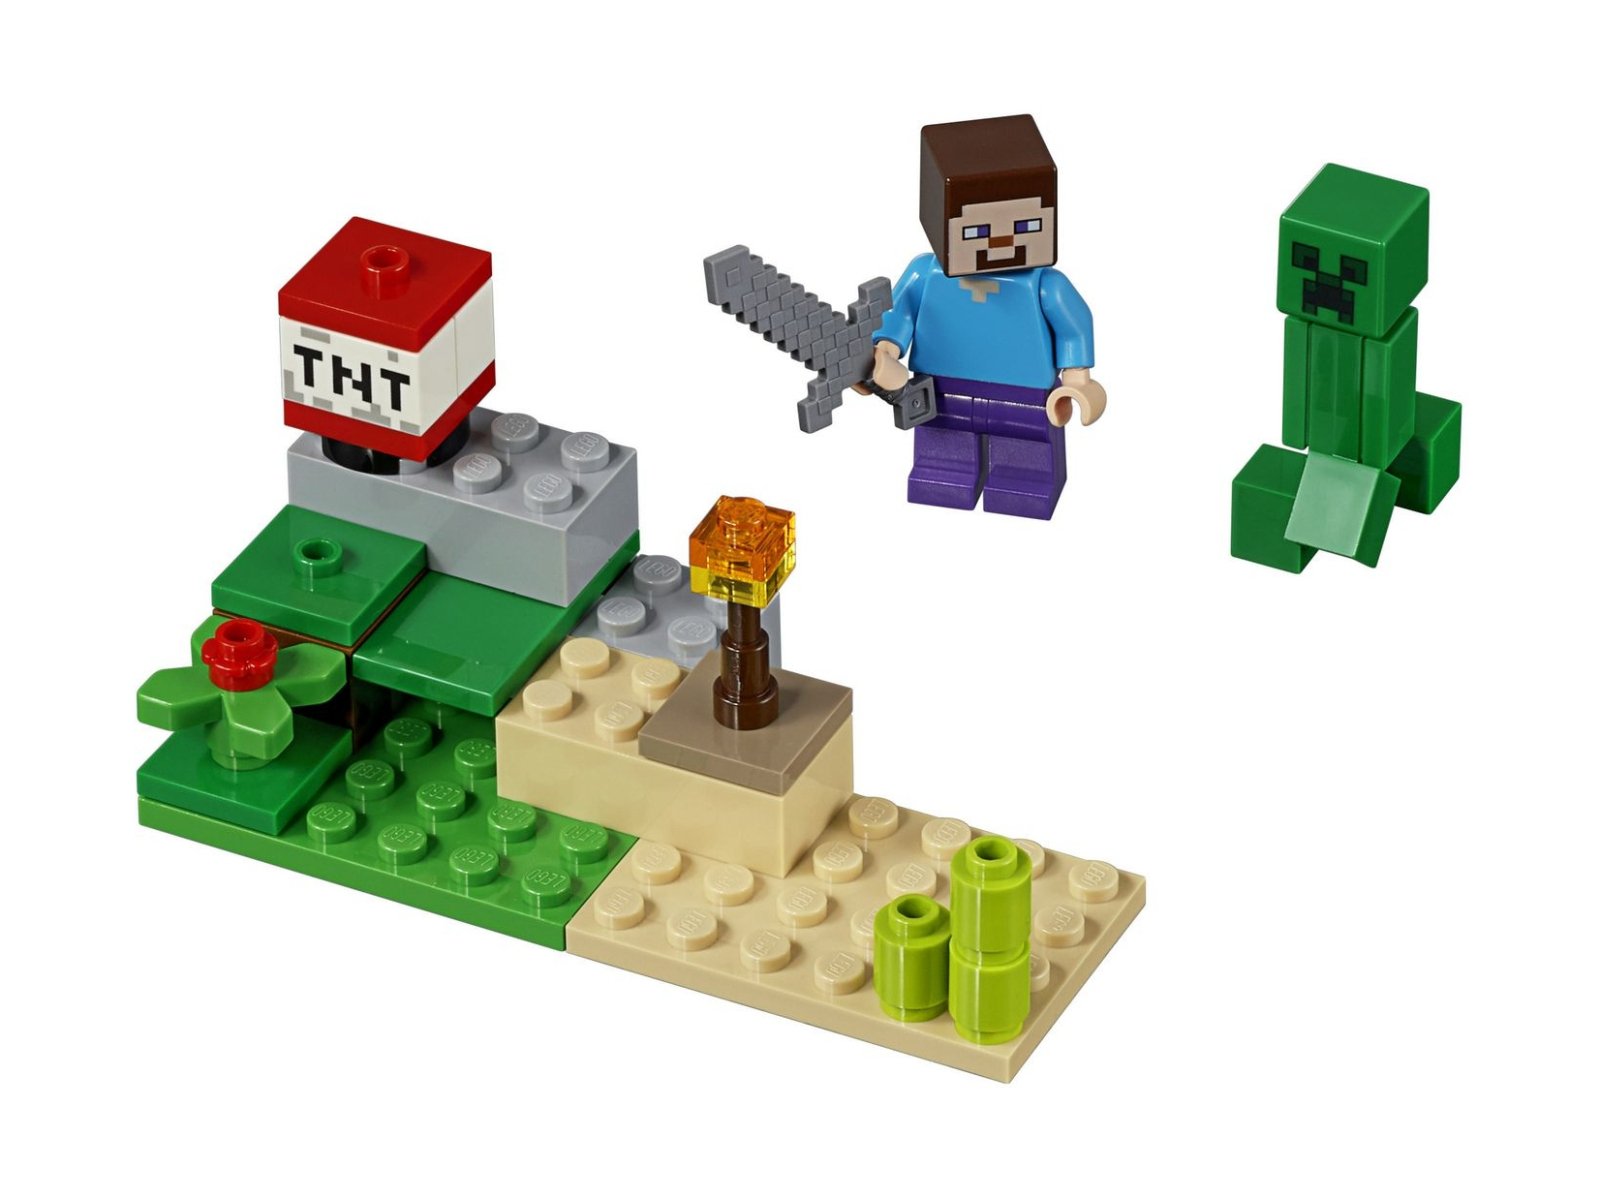 LEGO Minecraft 30393 Steve and Creeper™ Set